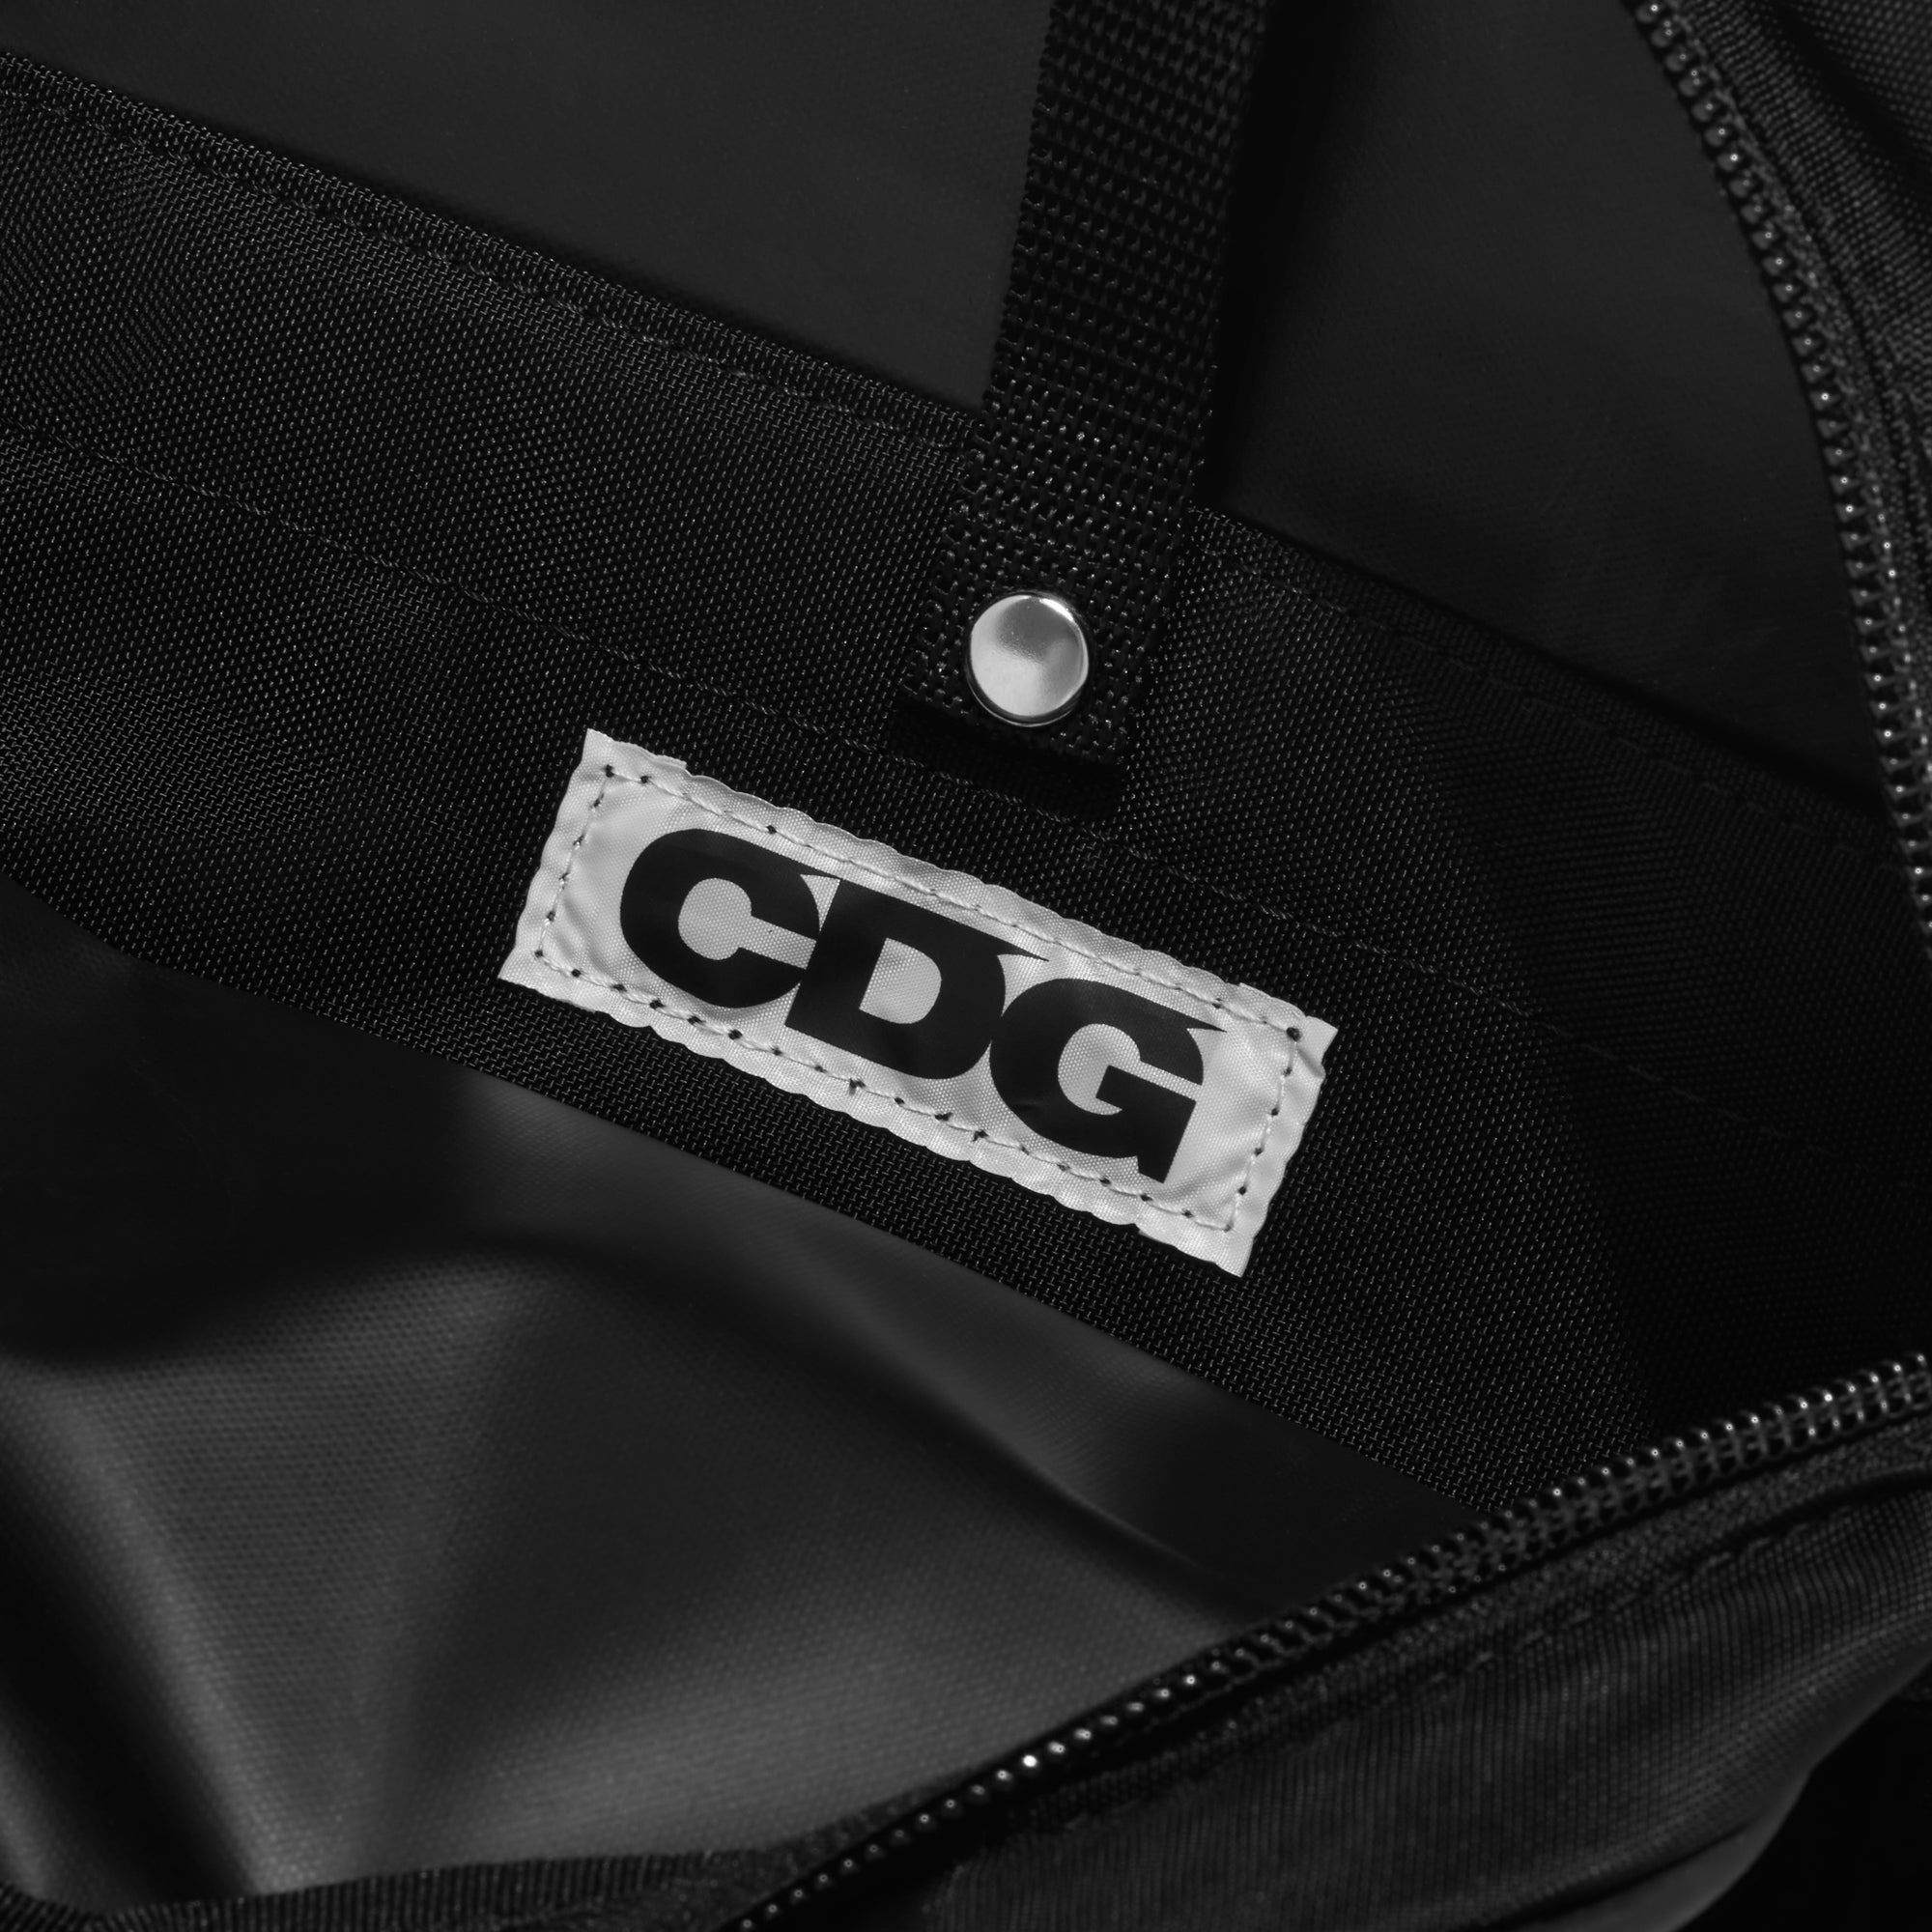 CDG - Small Shoulder Bag - (Black) view 4